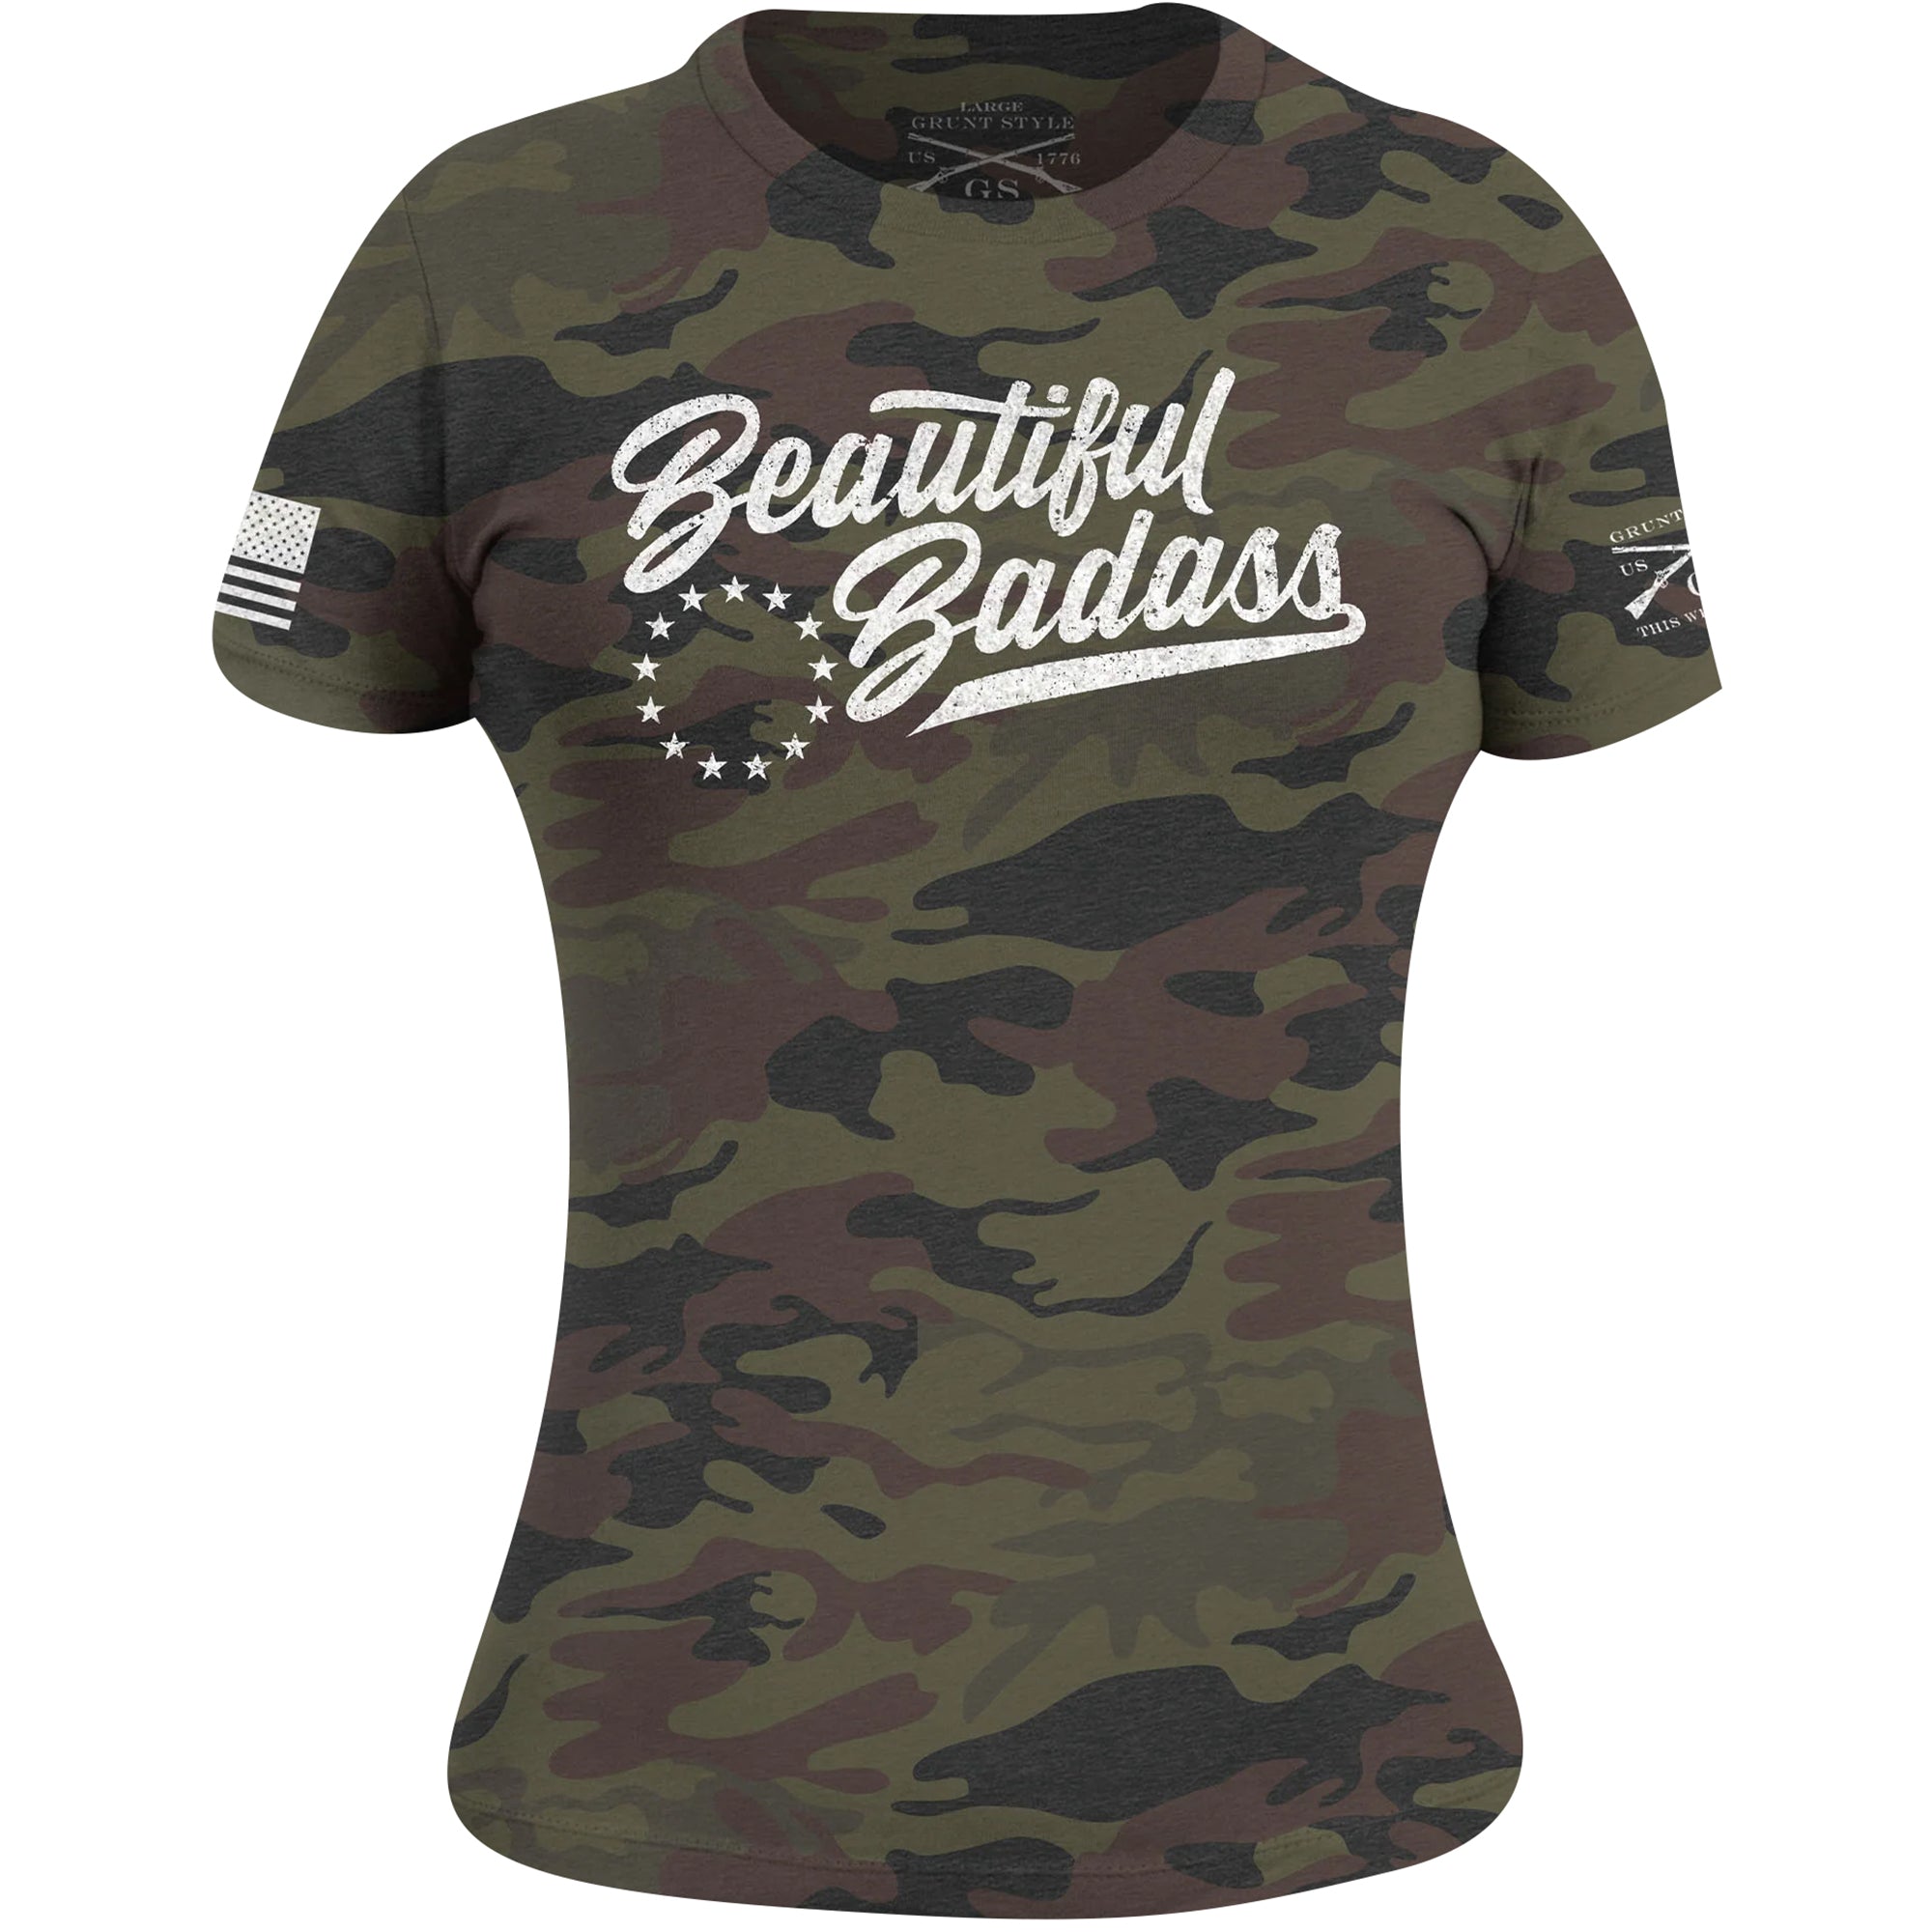 Grunt Style Women's Beautiful Badass T-Shirt - Woodland Camo Grunt Style